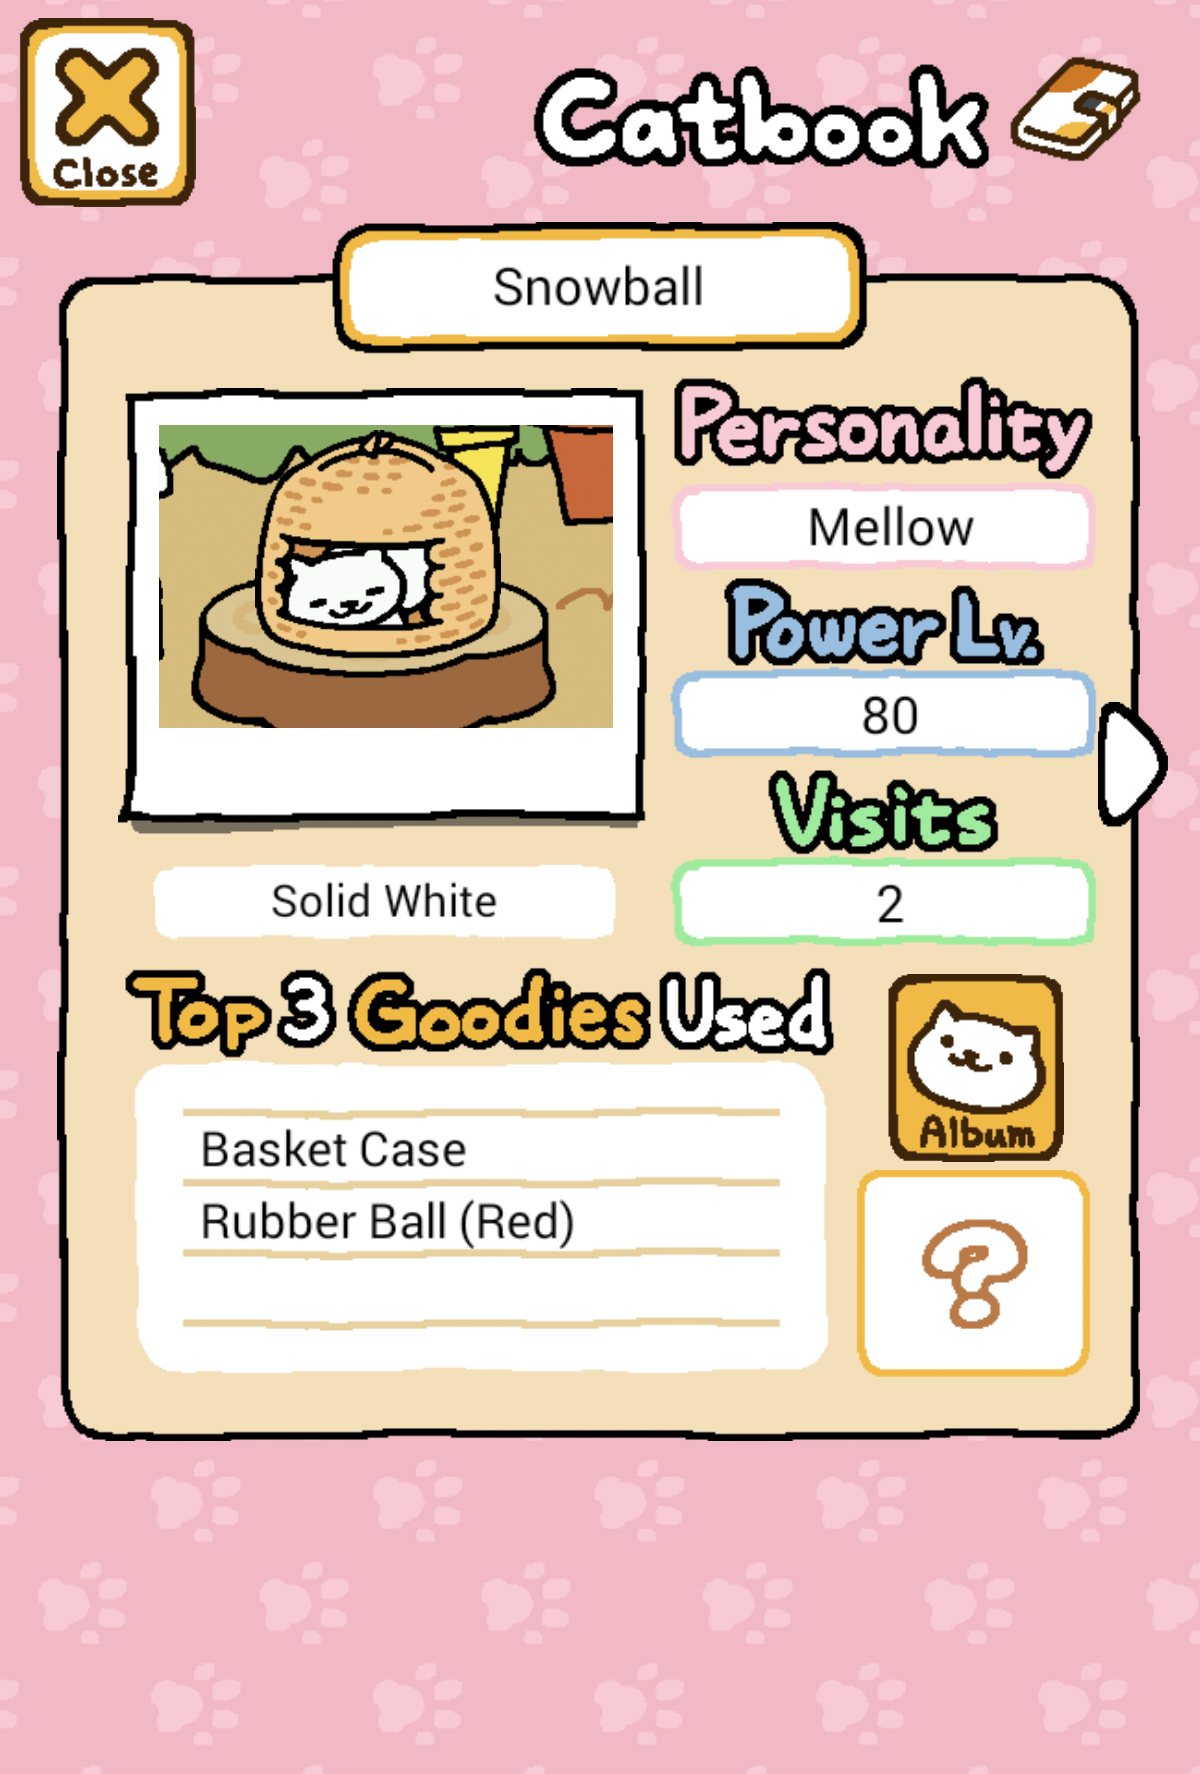 Play Neko Atsume: Kitty Collector Online